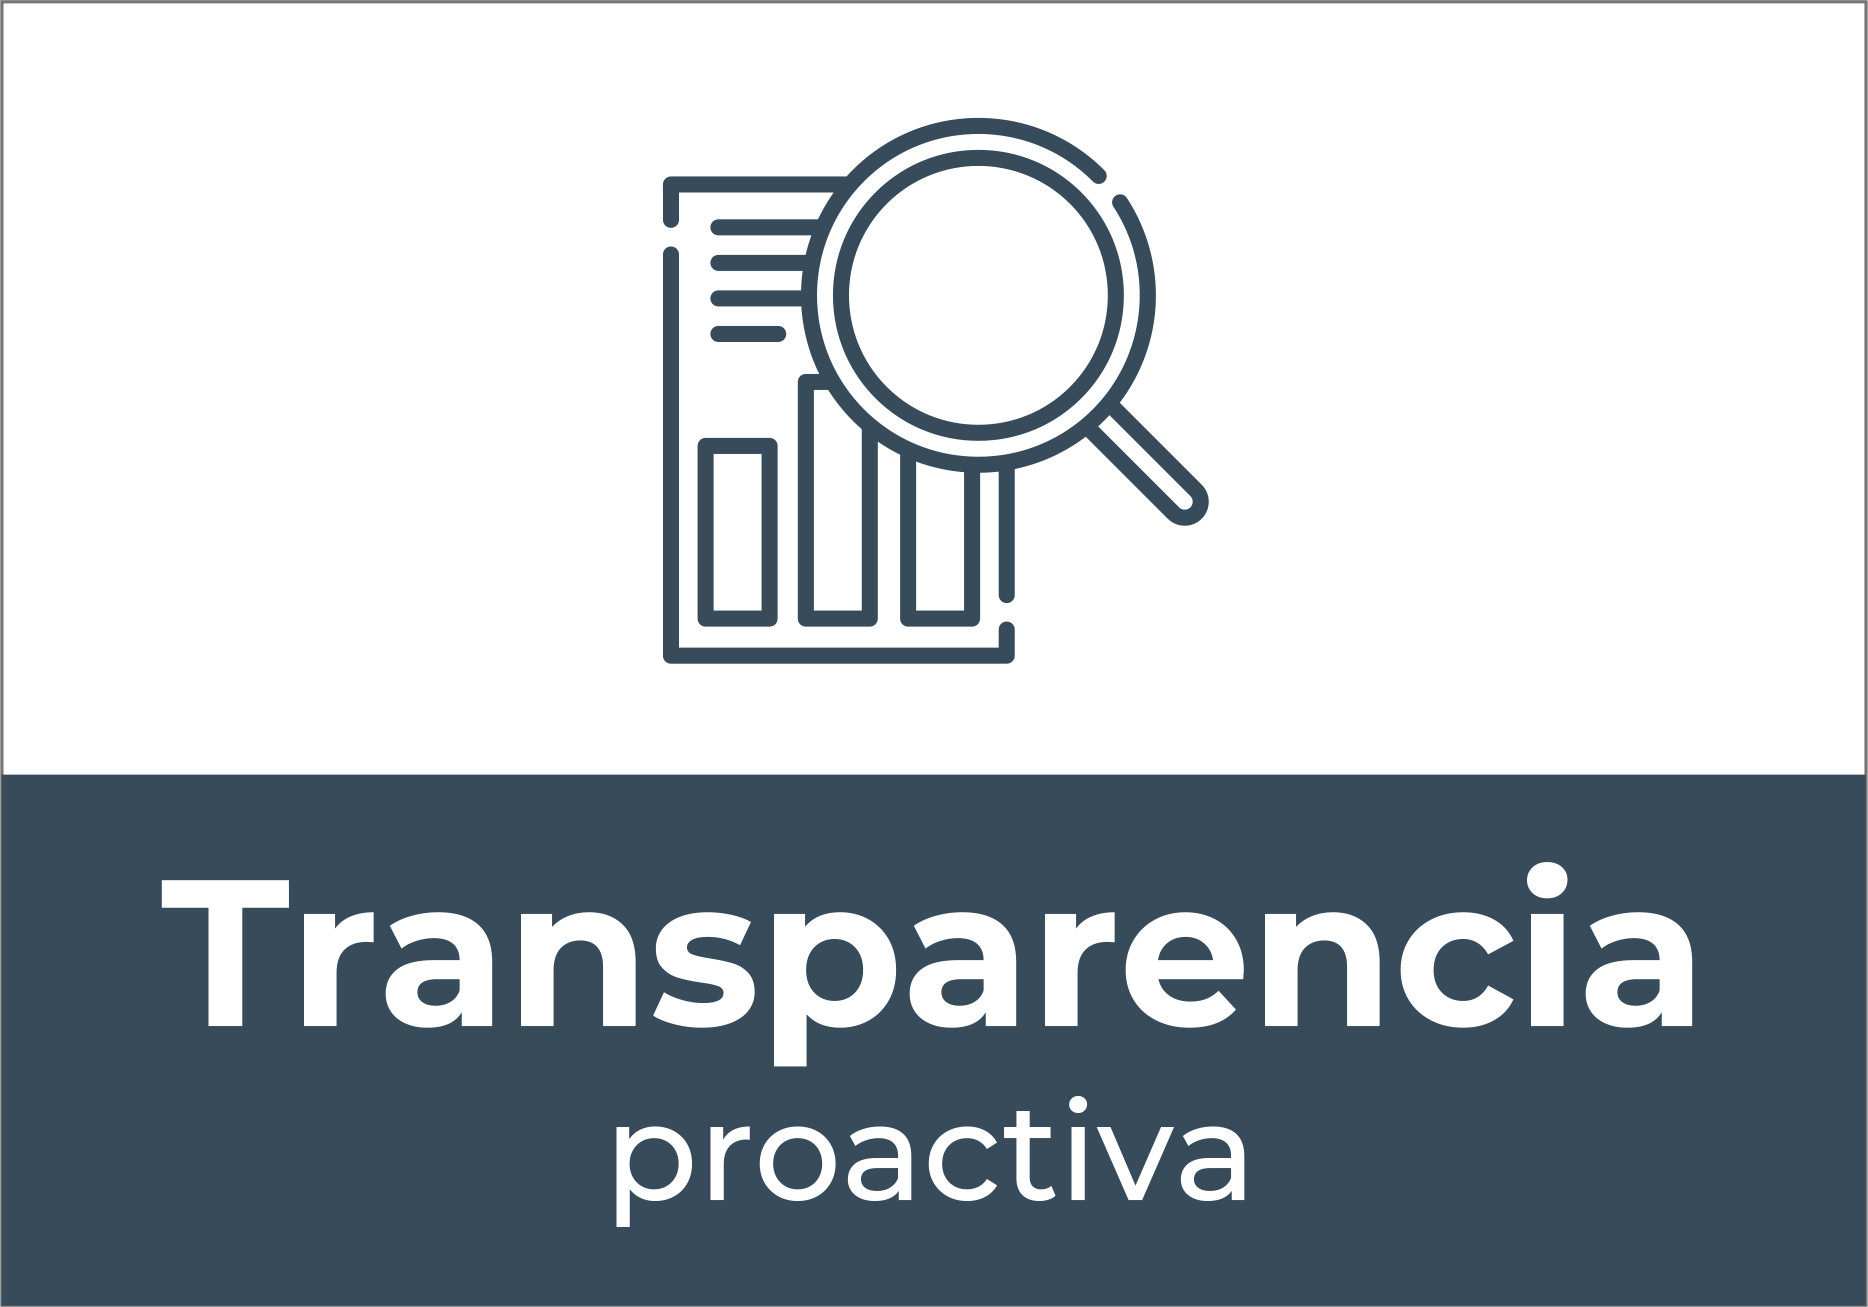 Transparencia proactiva